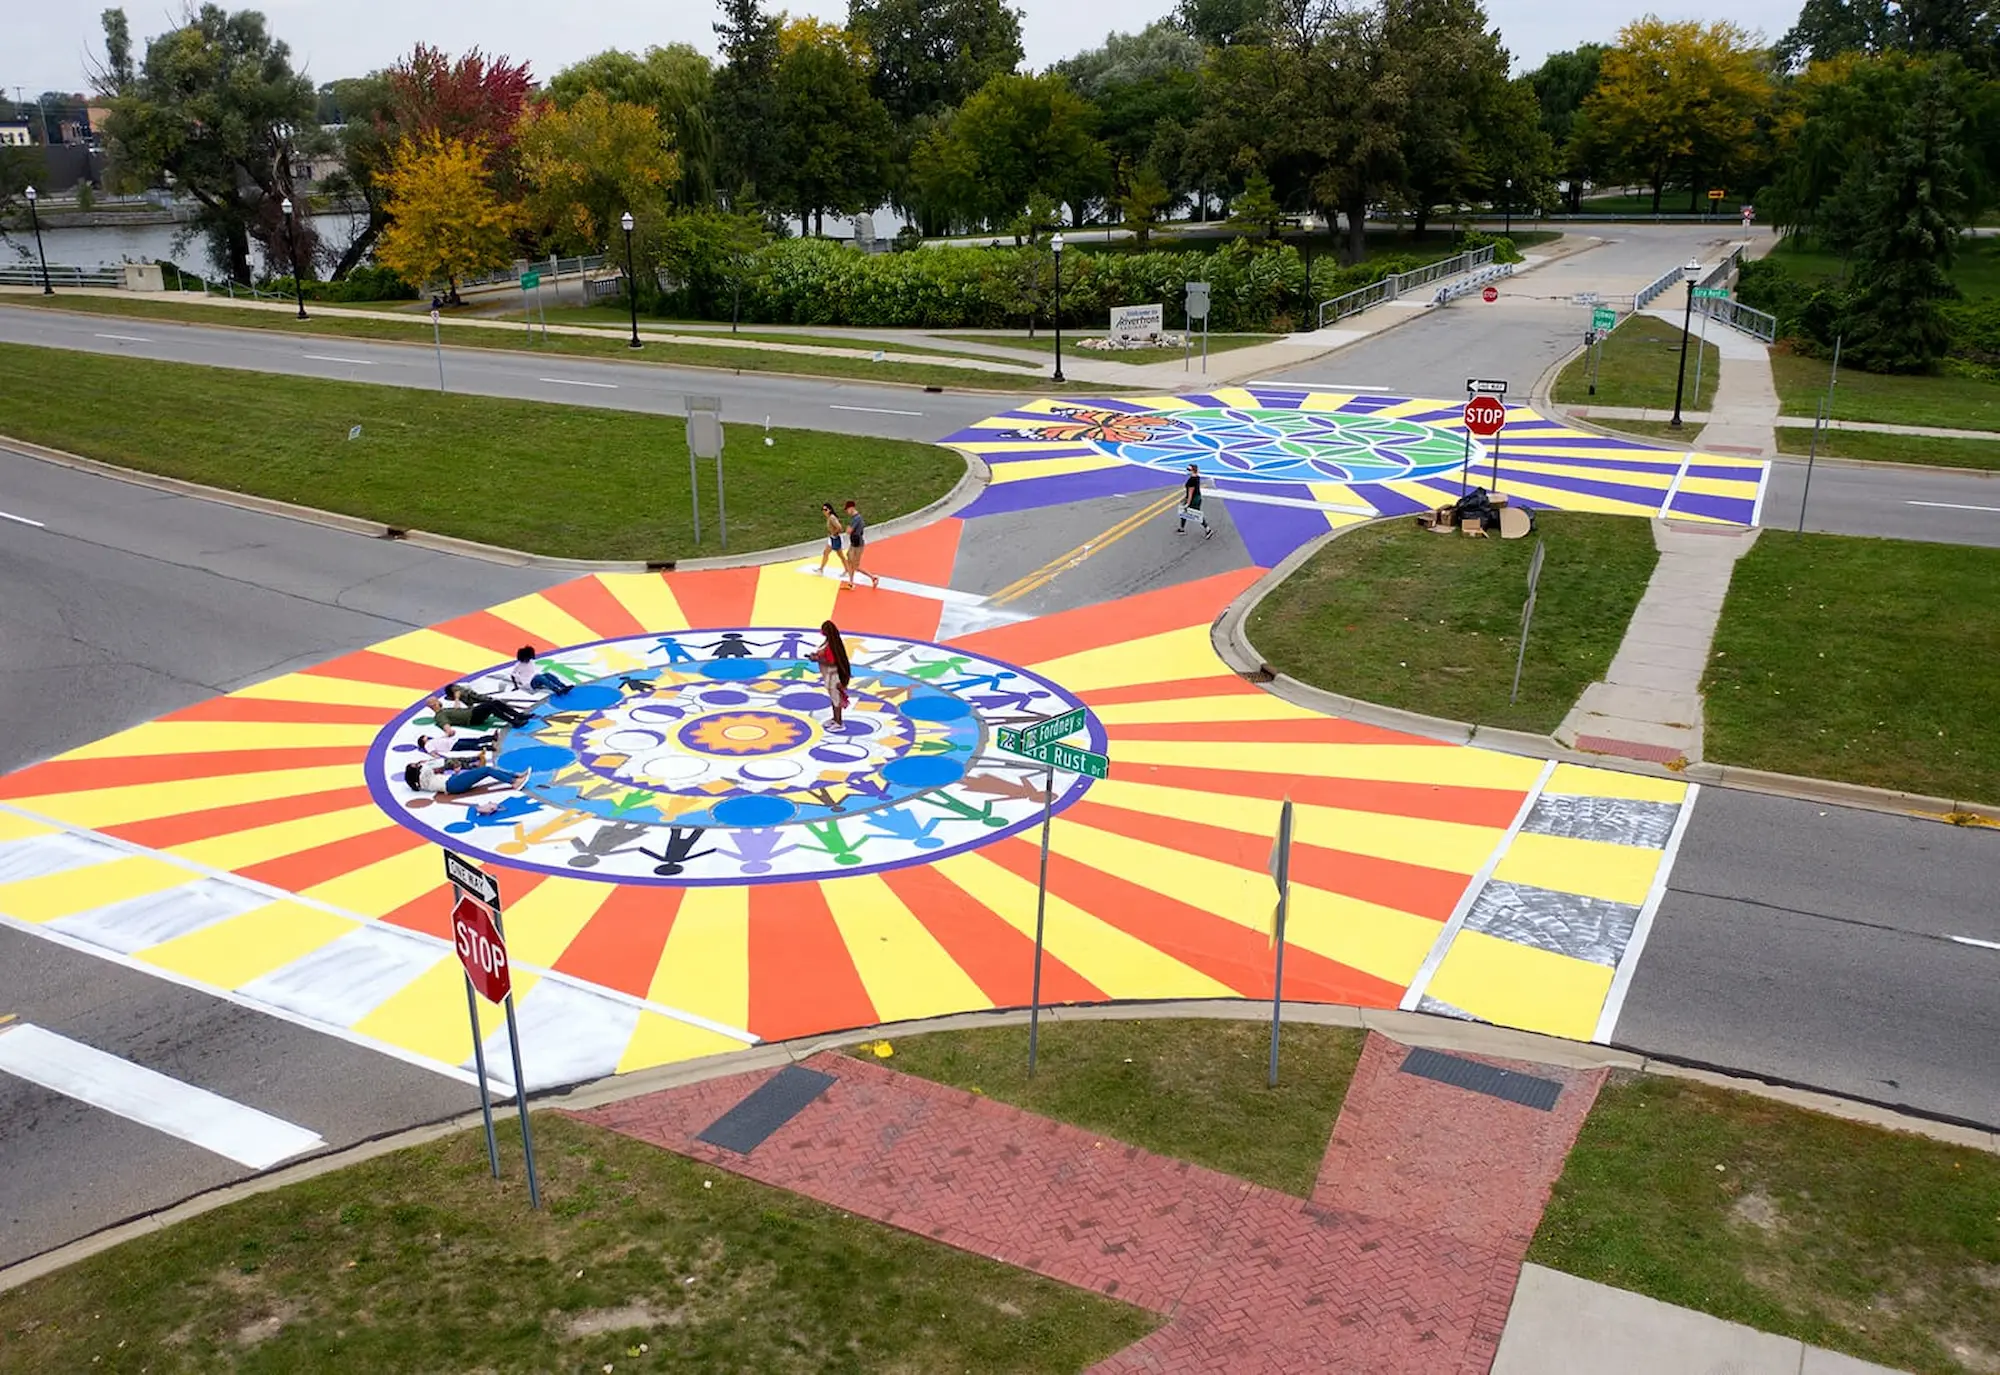 An example of an asphalt art project in Saginar, Michigan.